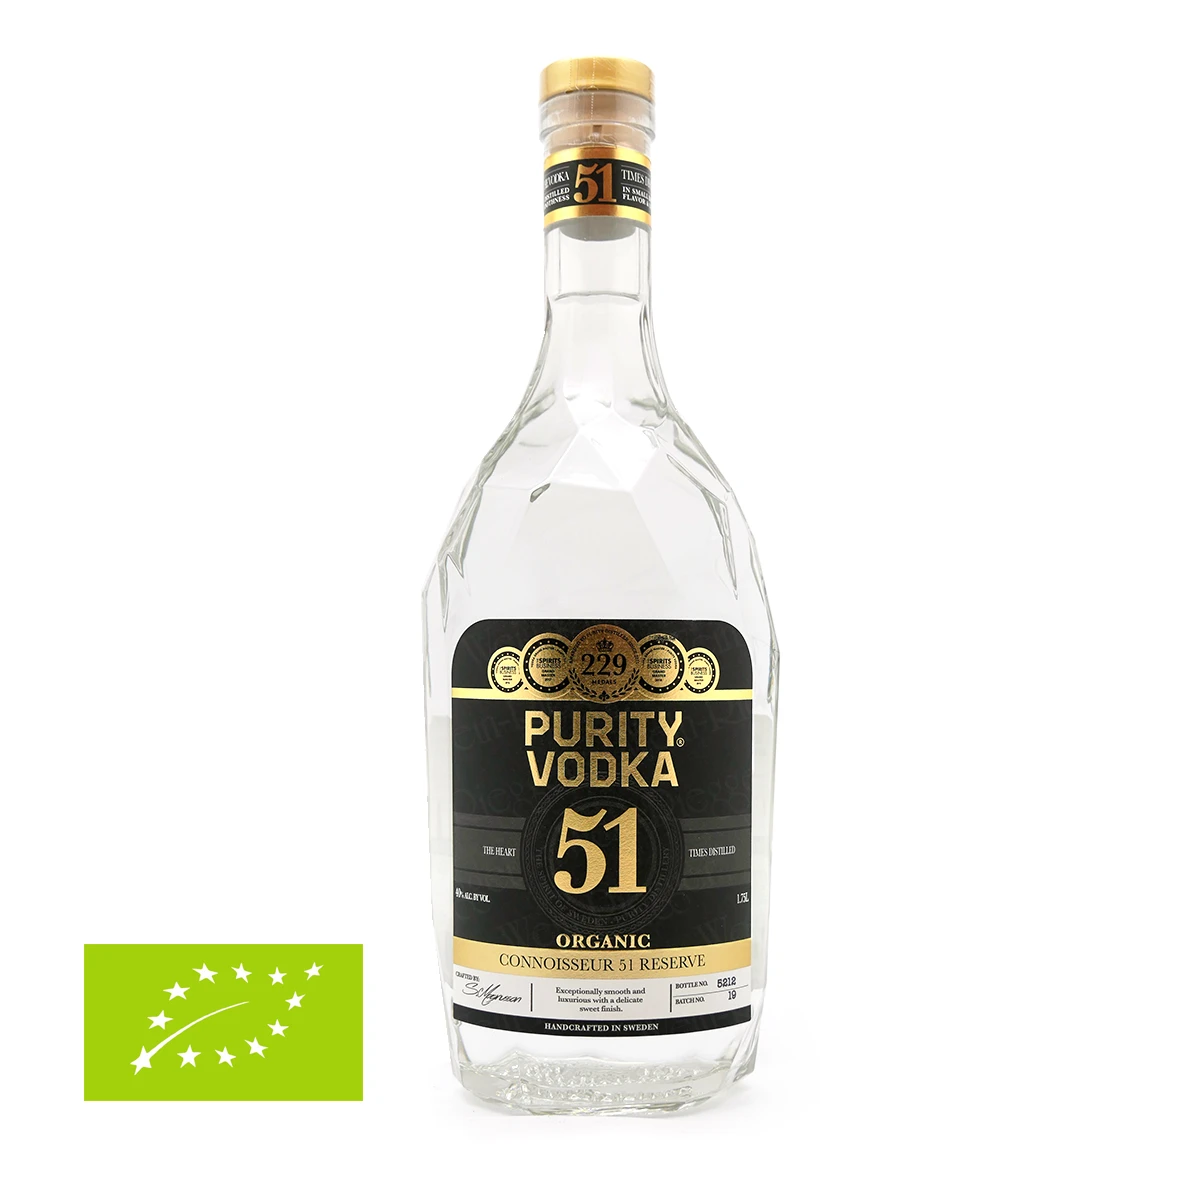 Purity Vodka CONNOISSEUR 51 RESERVE Organic